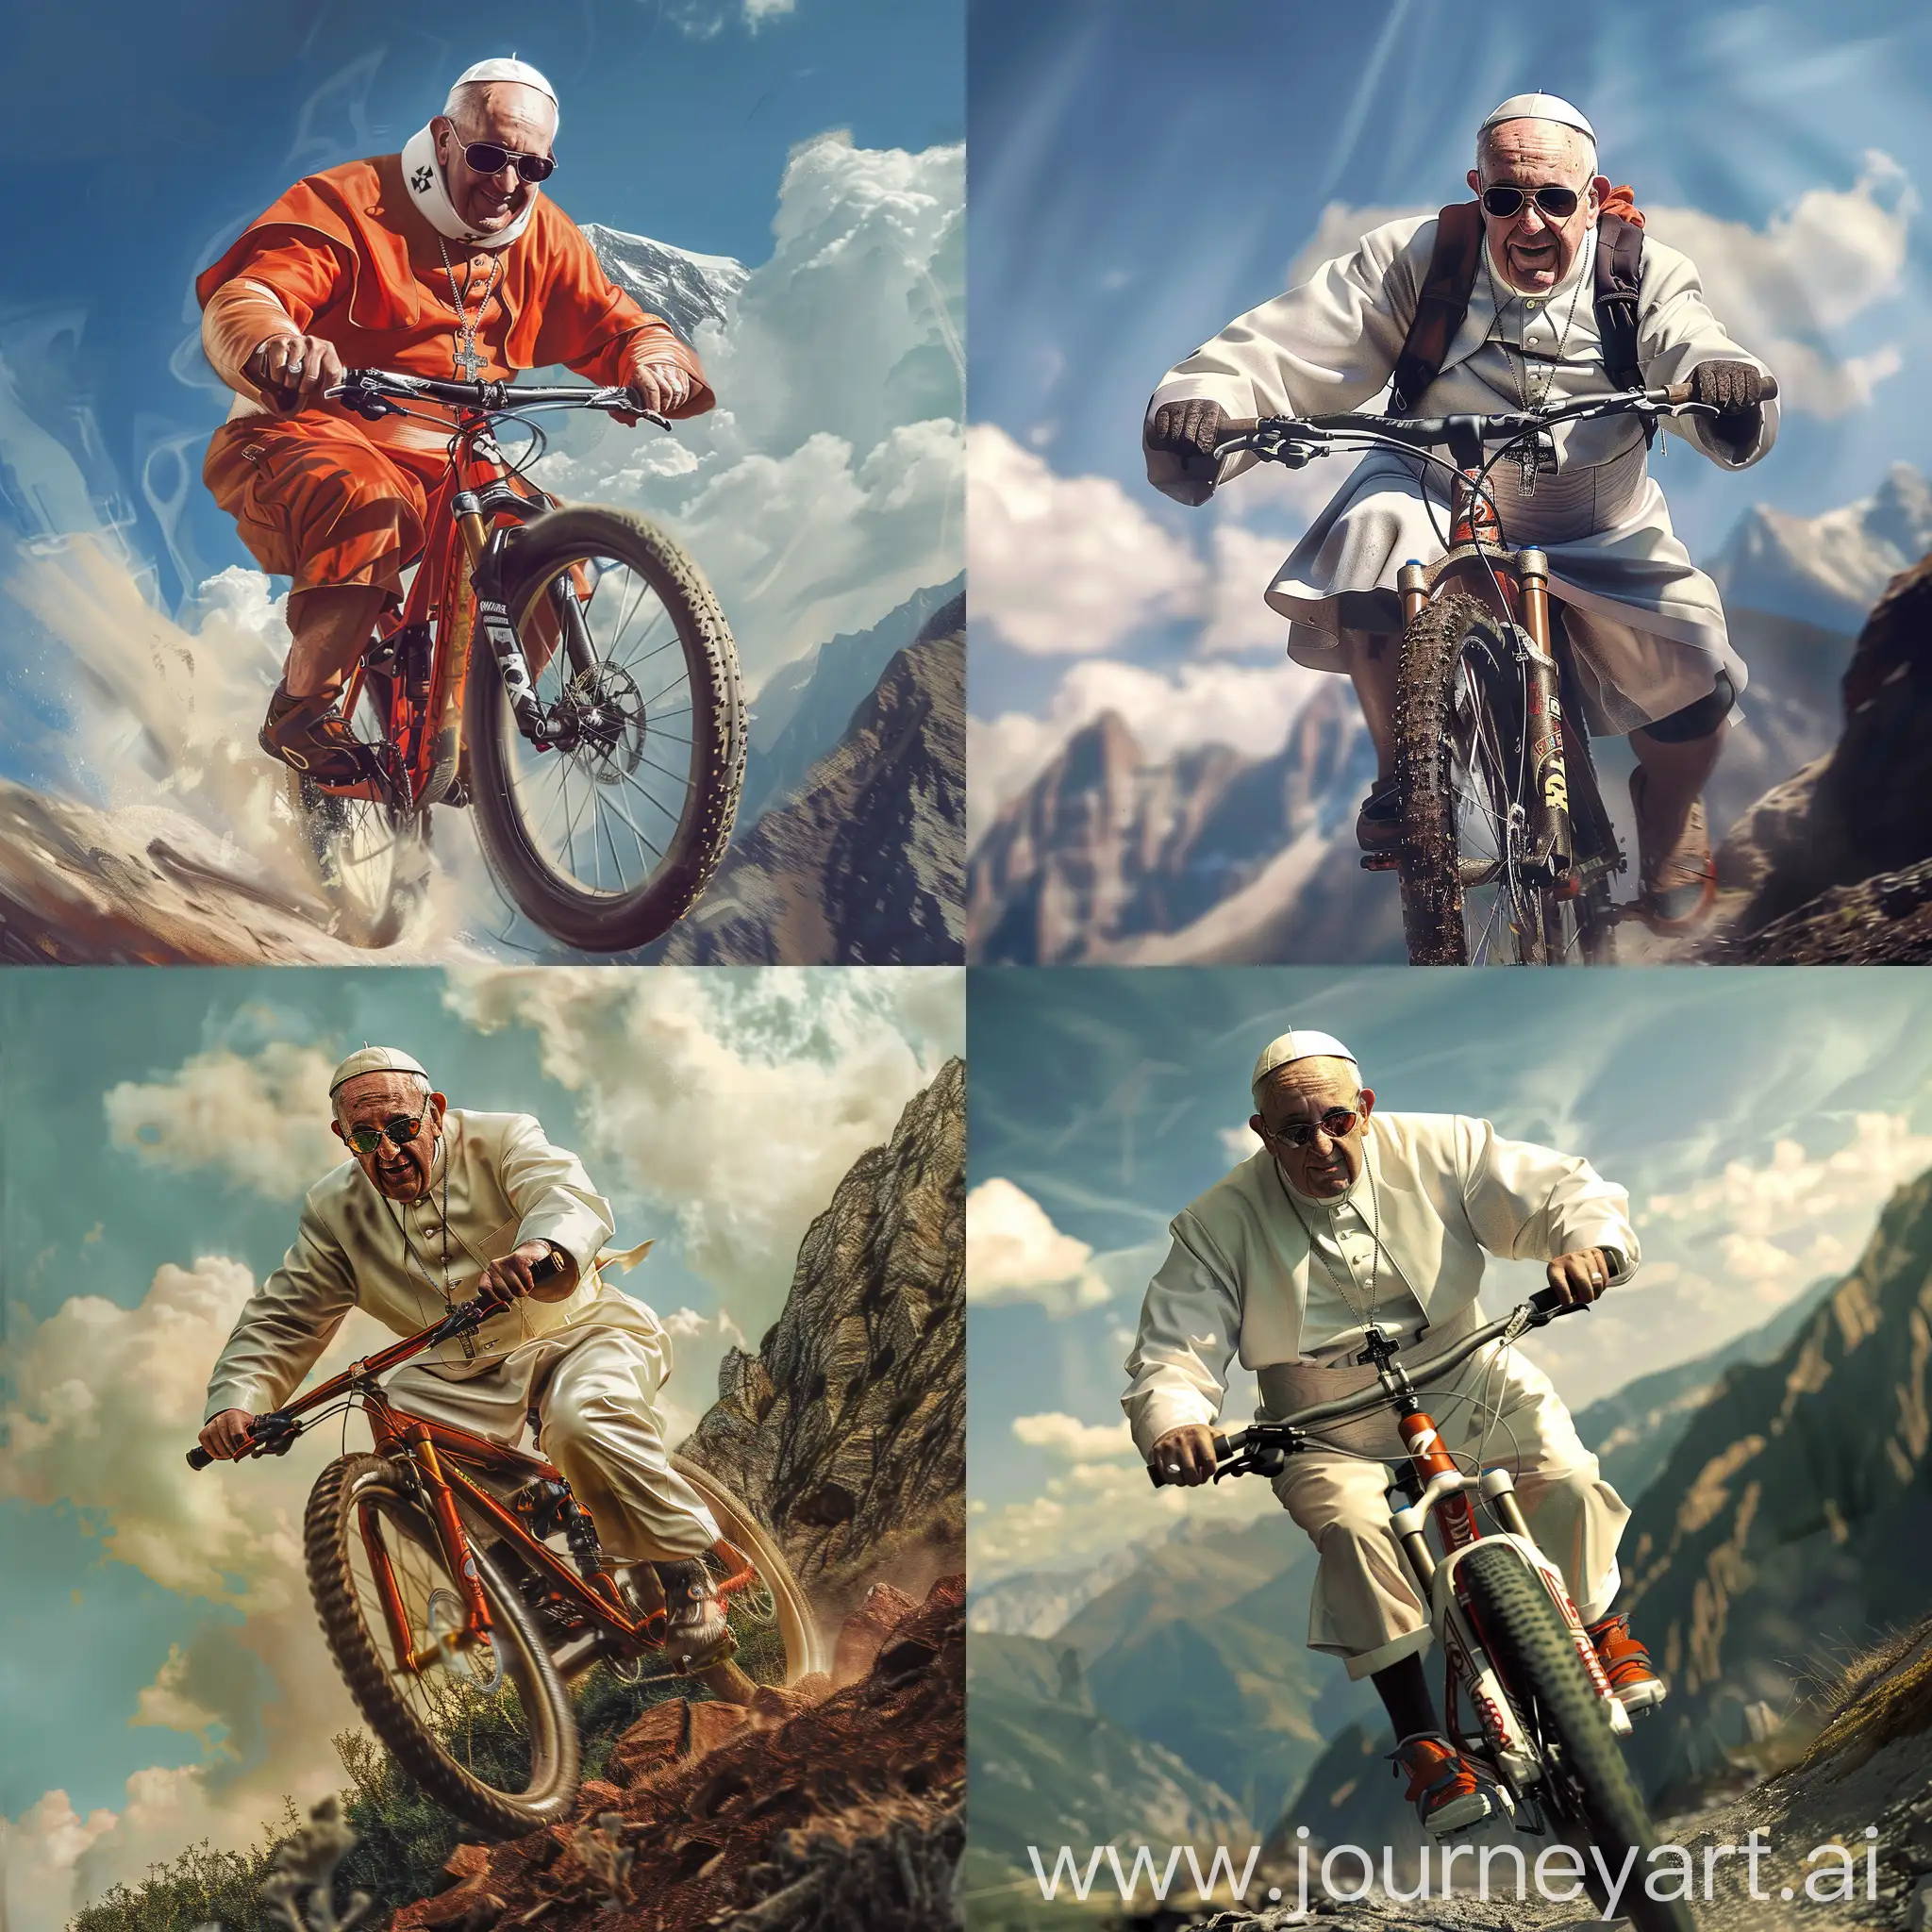 Pope-Francis-Mountain-Biking-Adventure-Spectacular-Photorealistic-8K-Scene